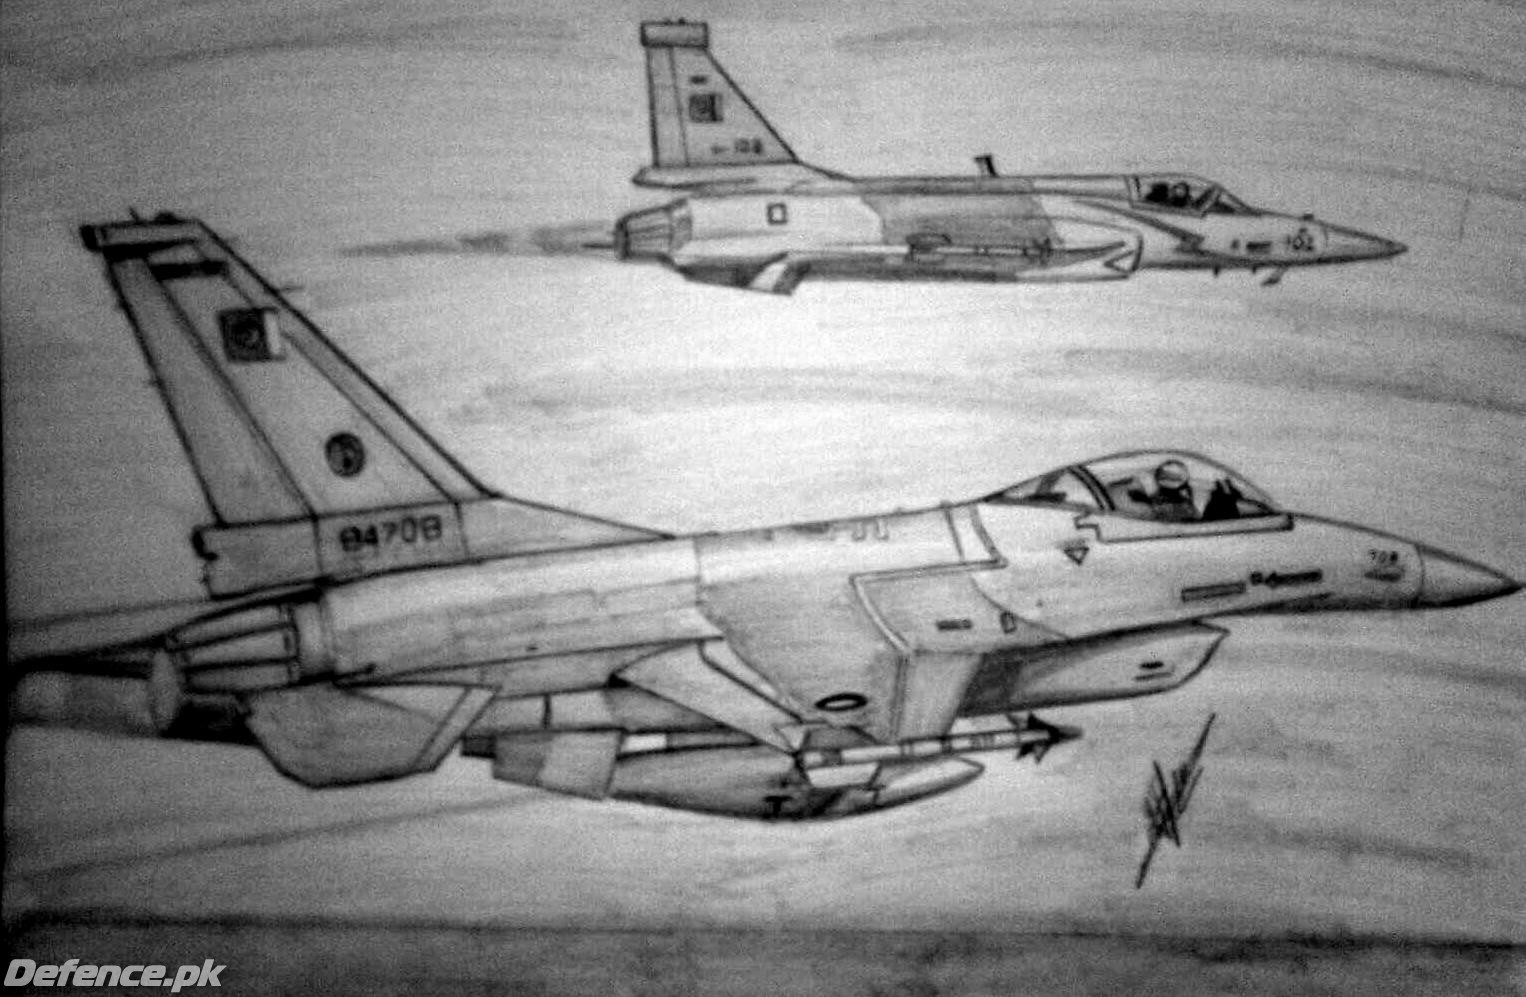 f-16 / jf-17 sketch by humza tariq